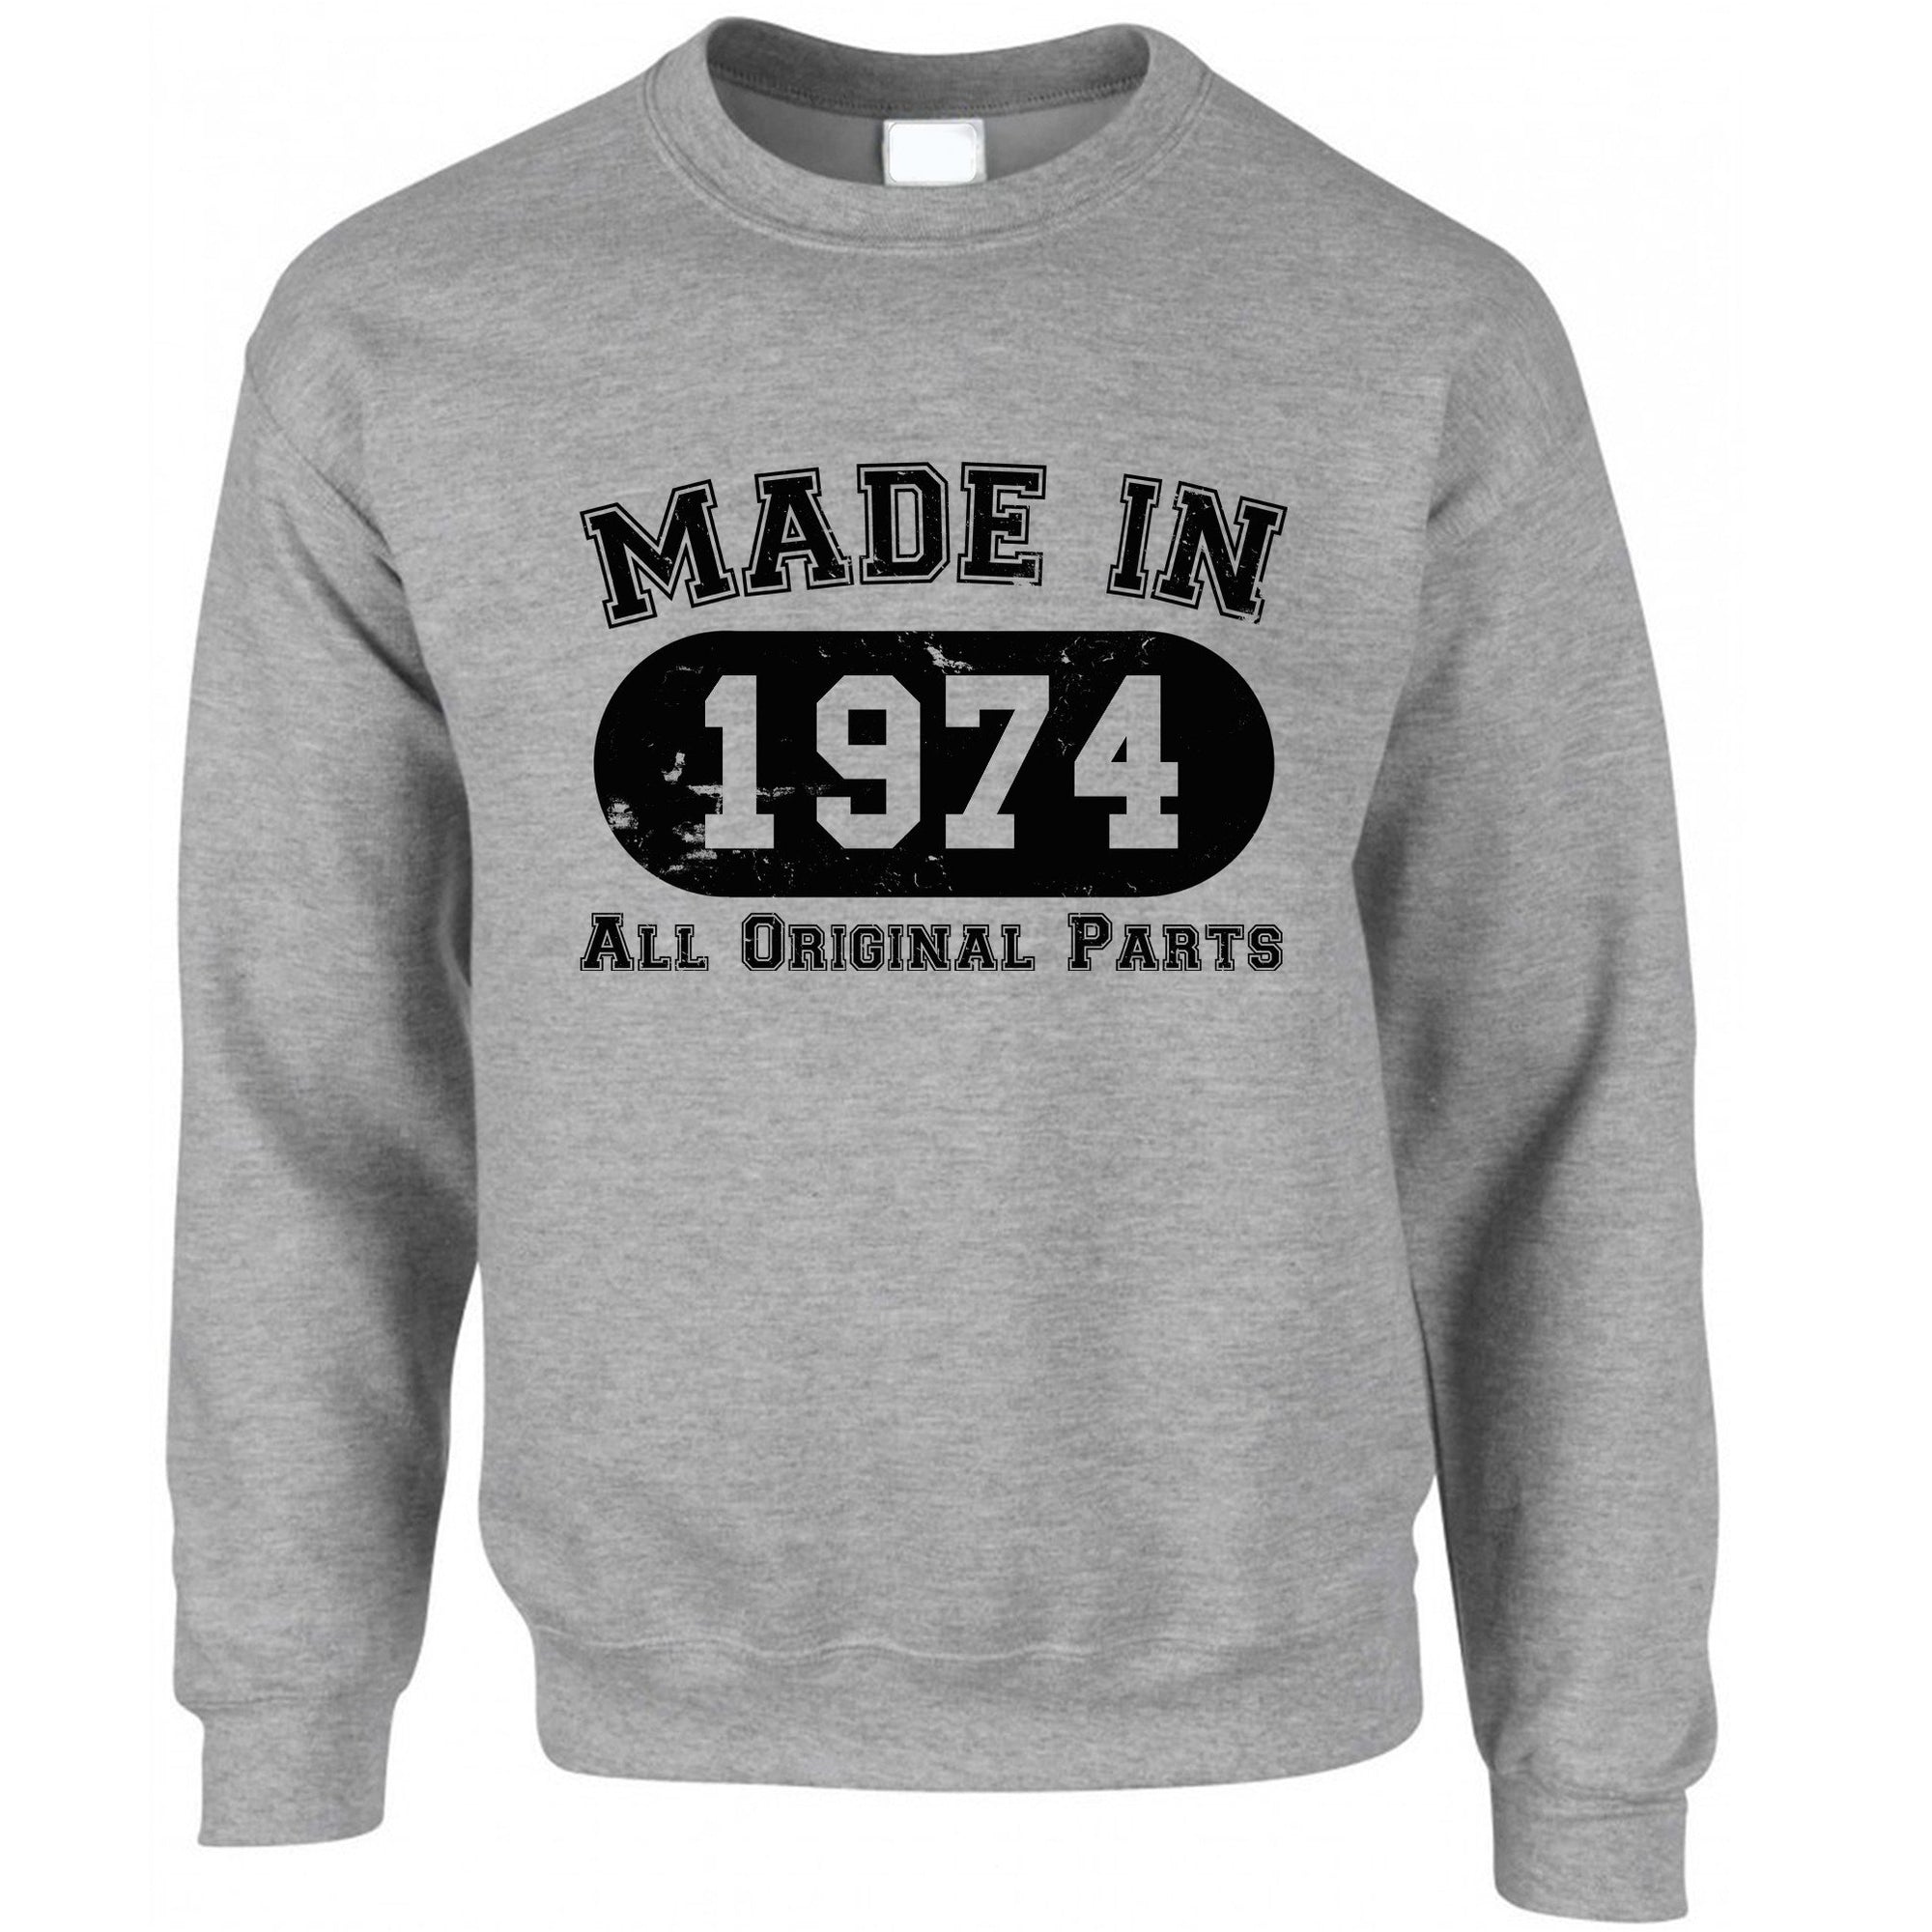 Made In 1974 All Original Parts White Sweatshirt - Shirtbox